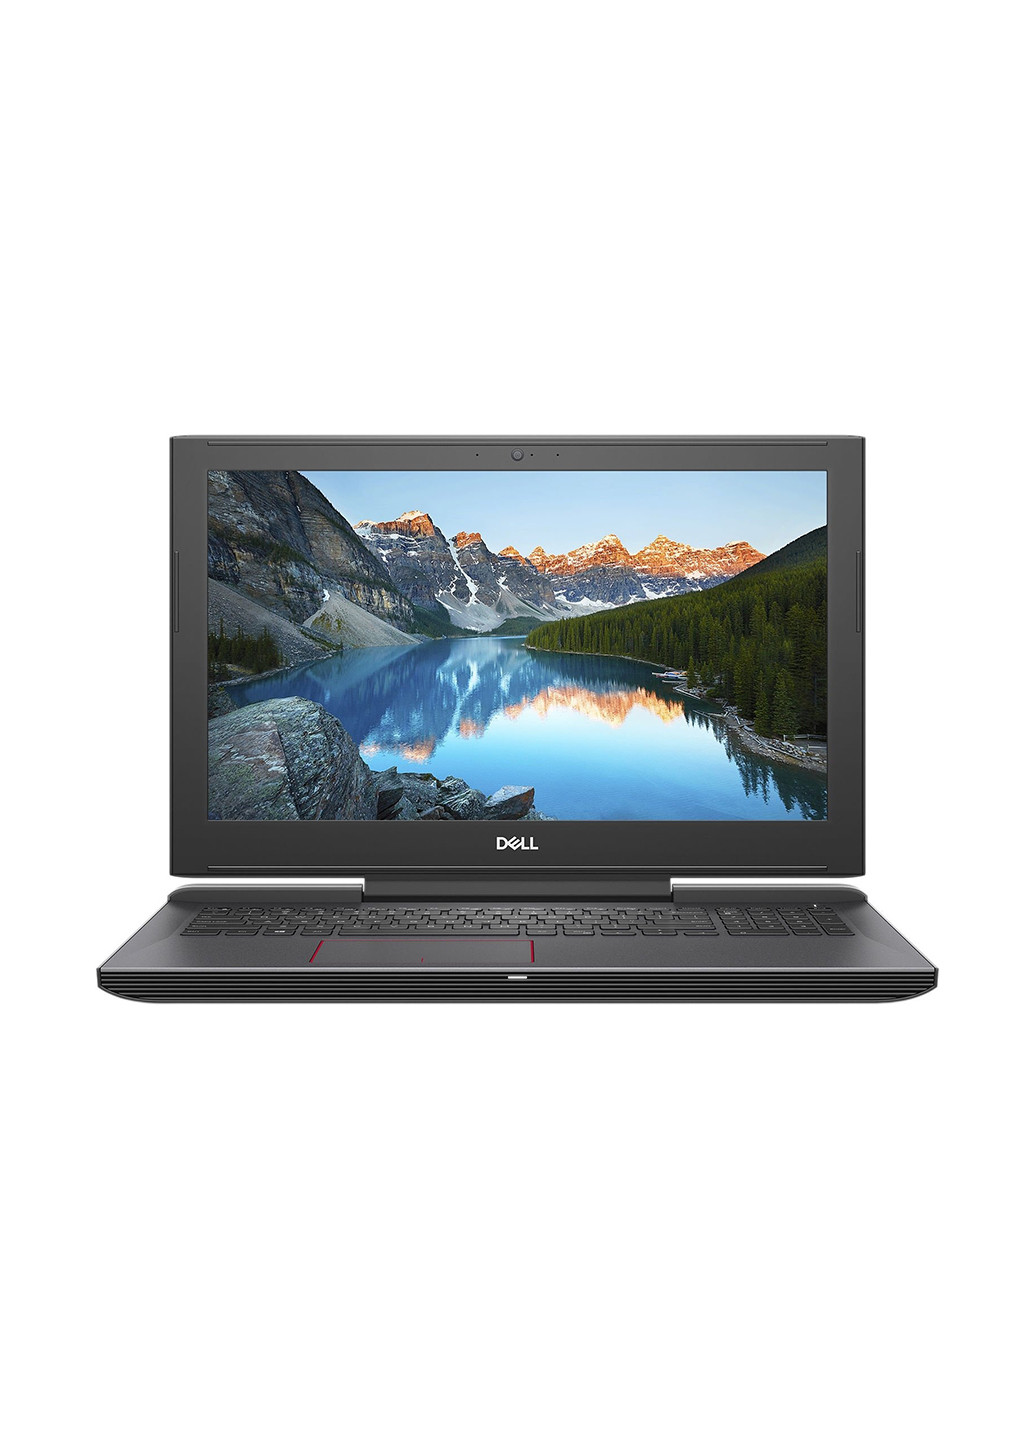 Ноутбук Dell inspiron g5 15 5587 (55g5i916s2h1g16-wbk) black (137041922)